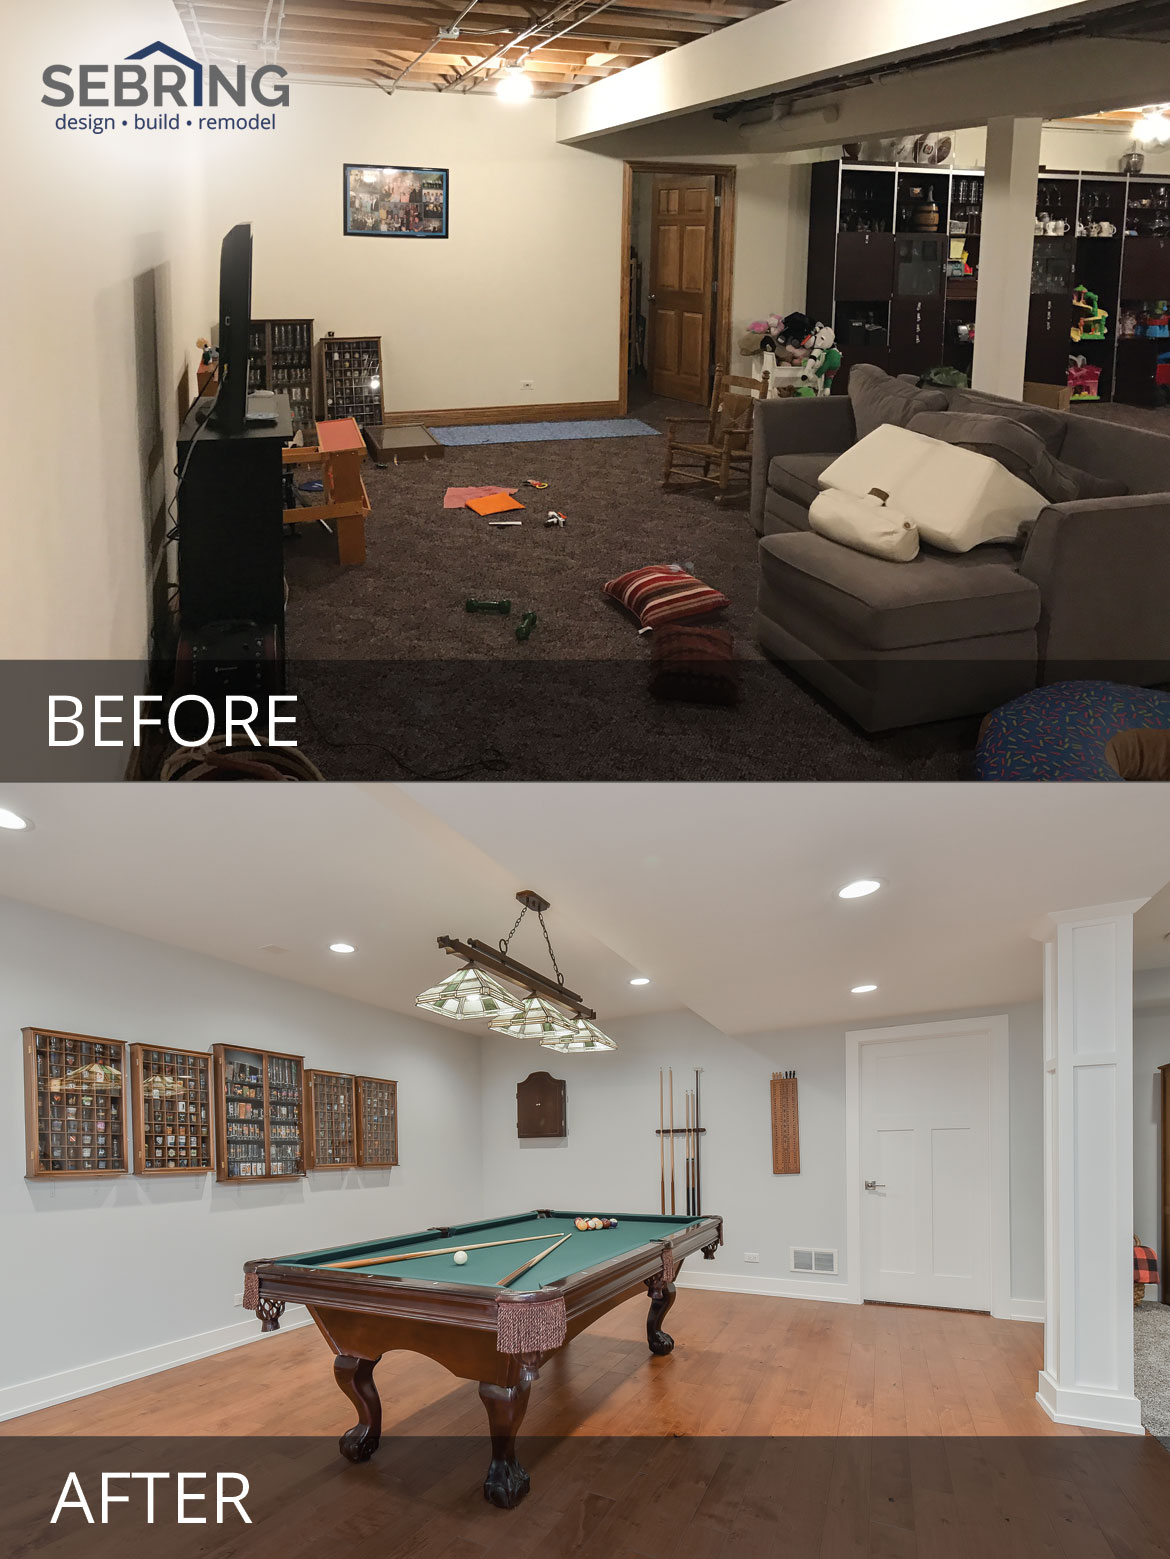 Stephan & Leslie's Basement Before & After Pictures | Home Remodeling Contractors | Sebring Design Build